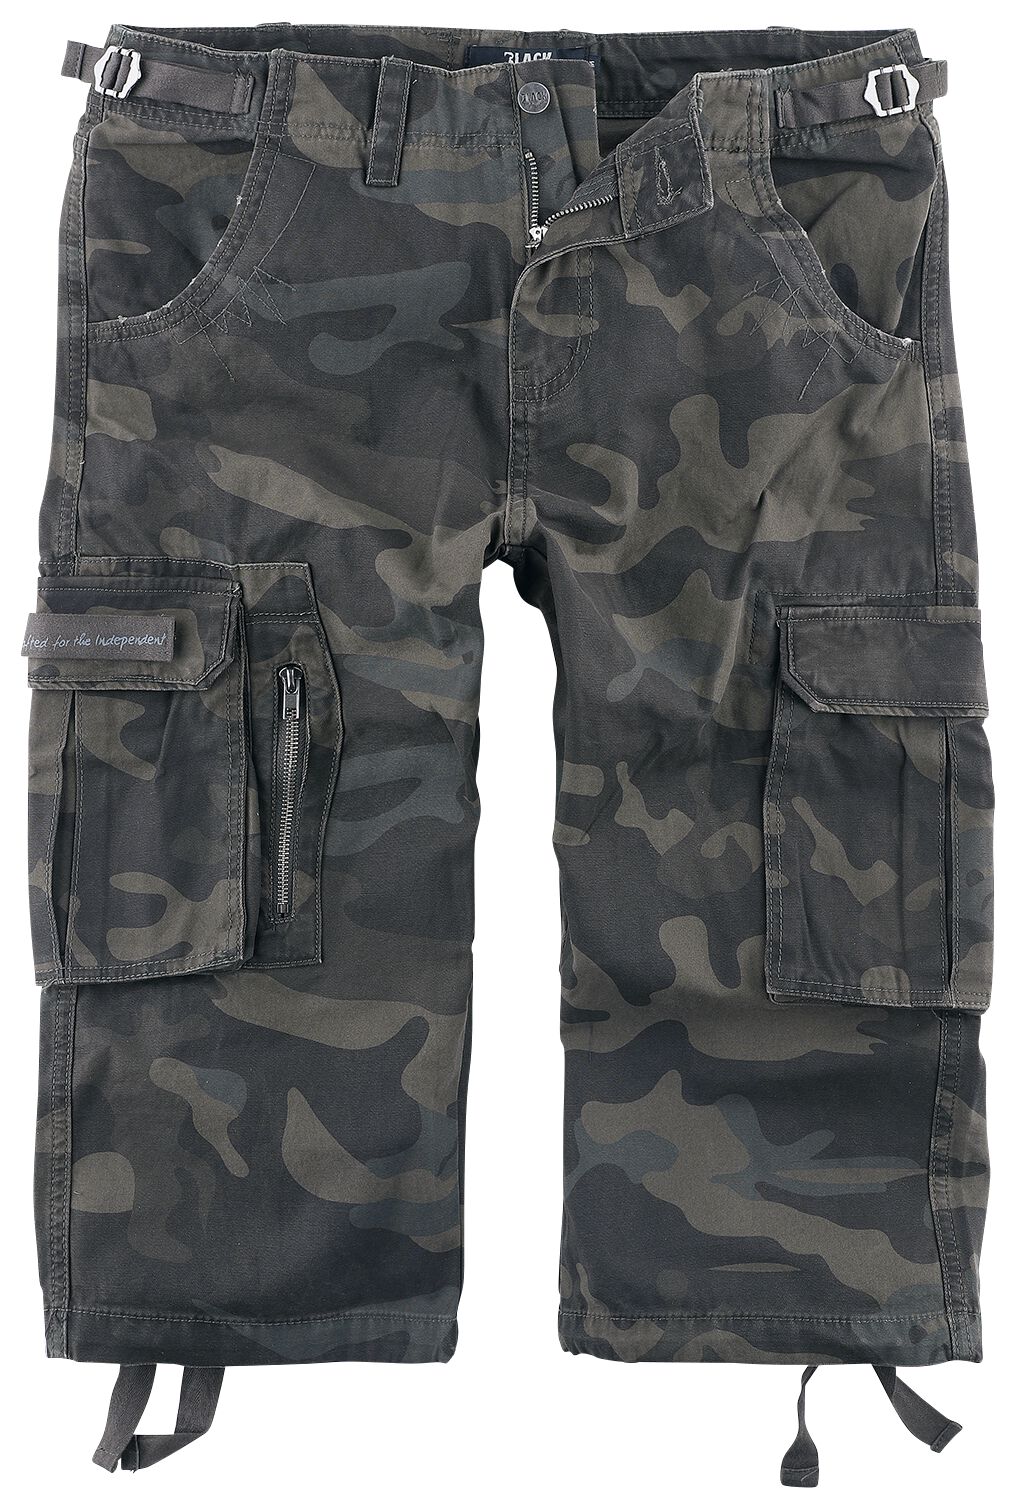 Black Premium by EMP 3/4 Army Vintage Shorts Short darkcamo in 6XL